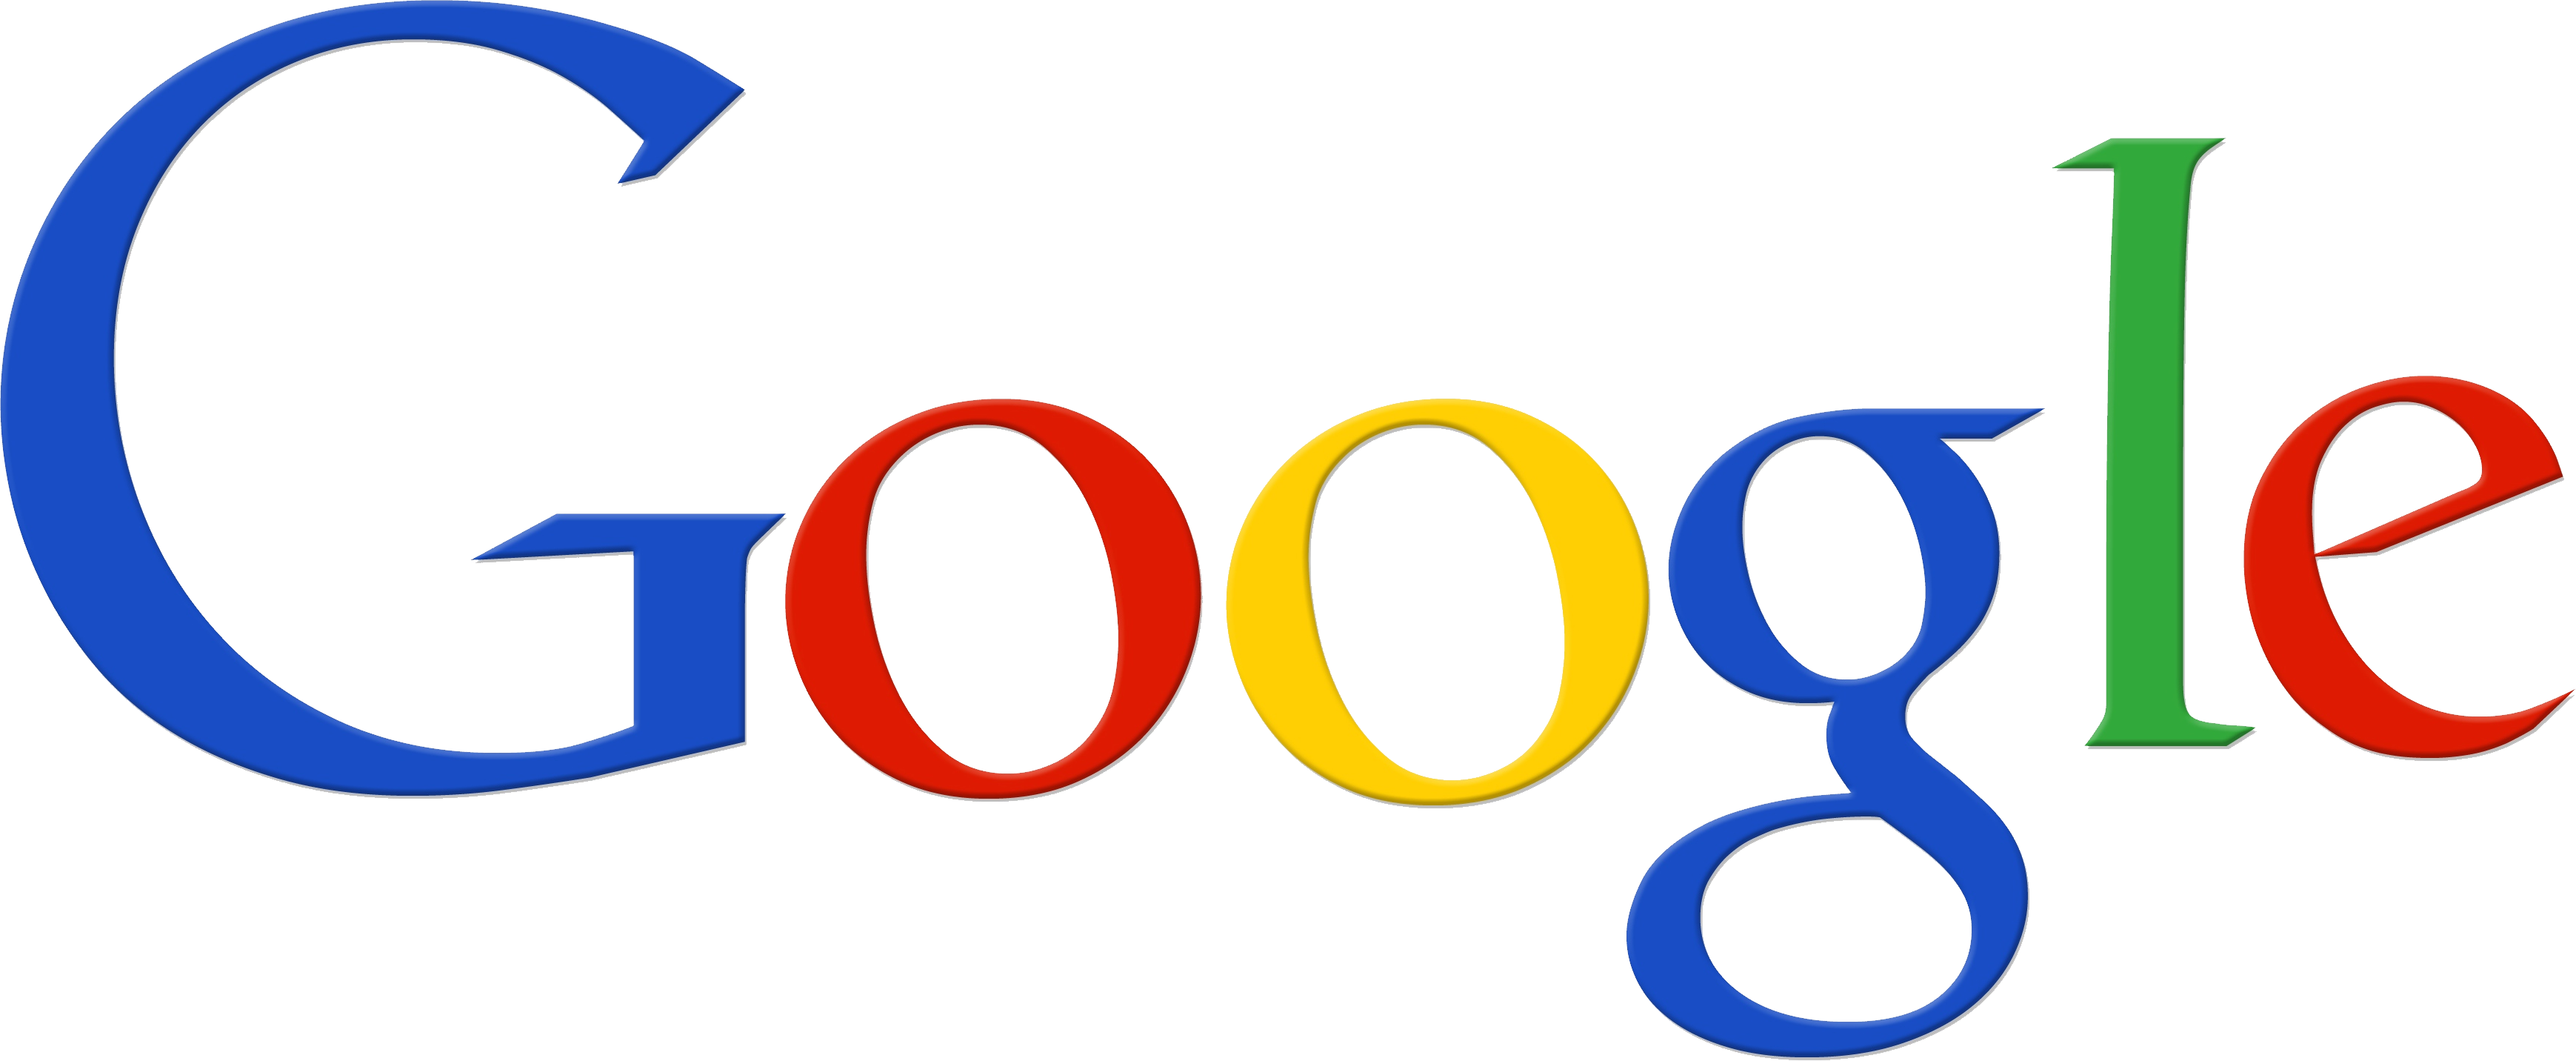 Images Logo Google Free Download PNG HD PNG Image